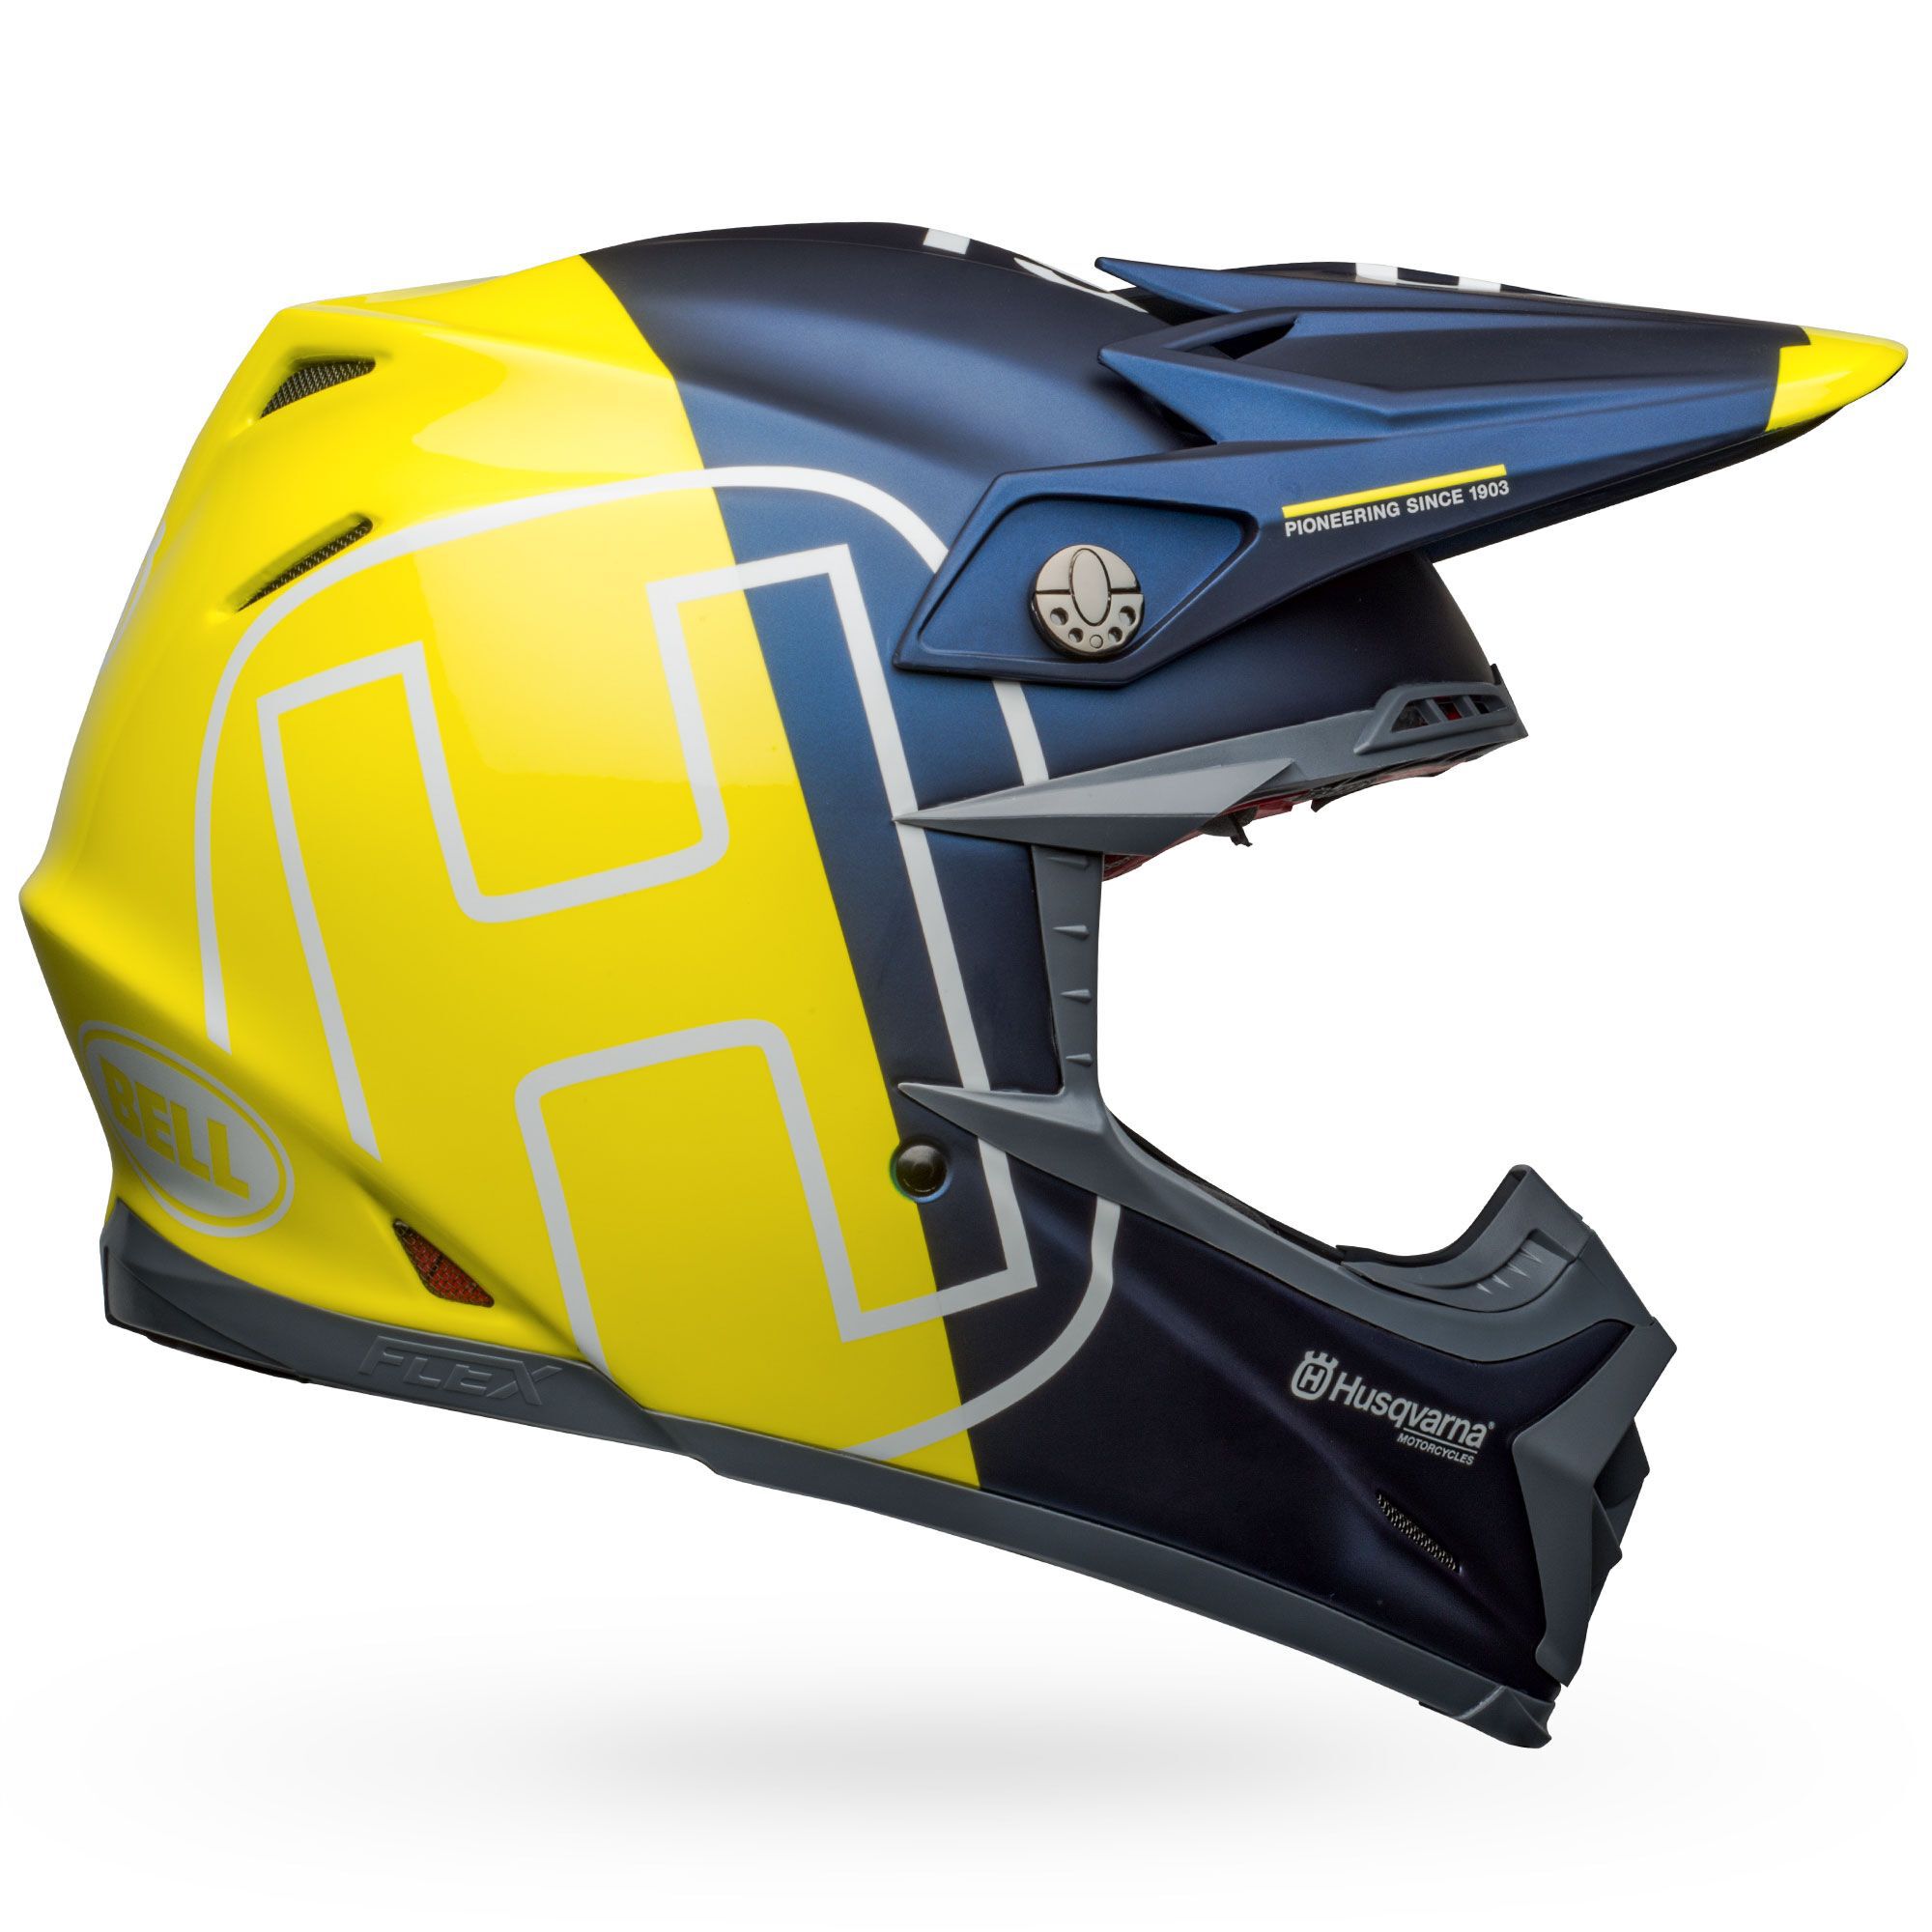 Division Matte/Gloss Black/Hi-Viz/Gray, X-Large Bell Moto-9 Flex Off-Road Motorcycle Helmet